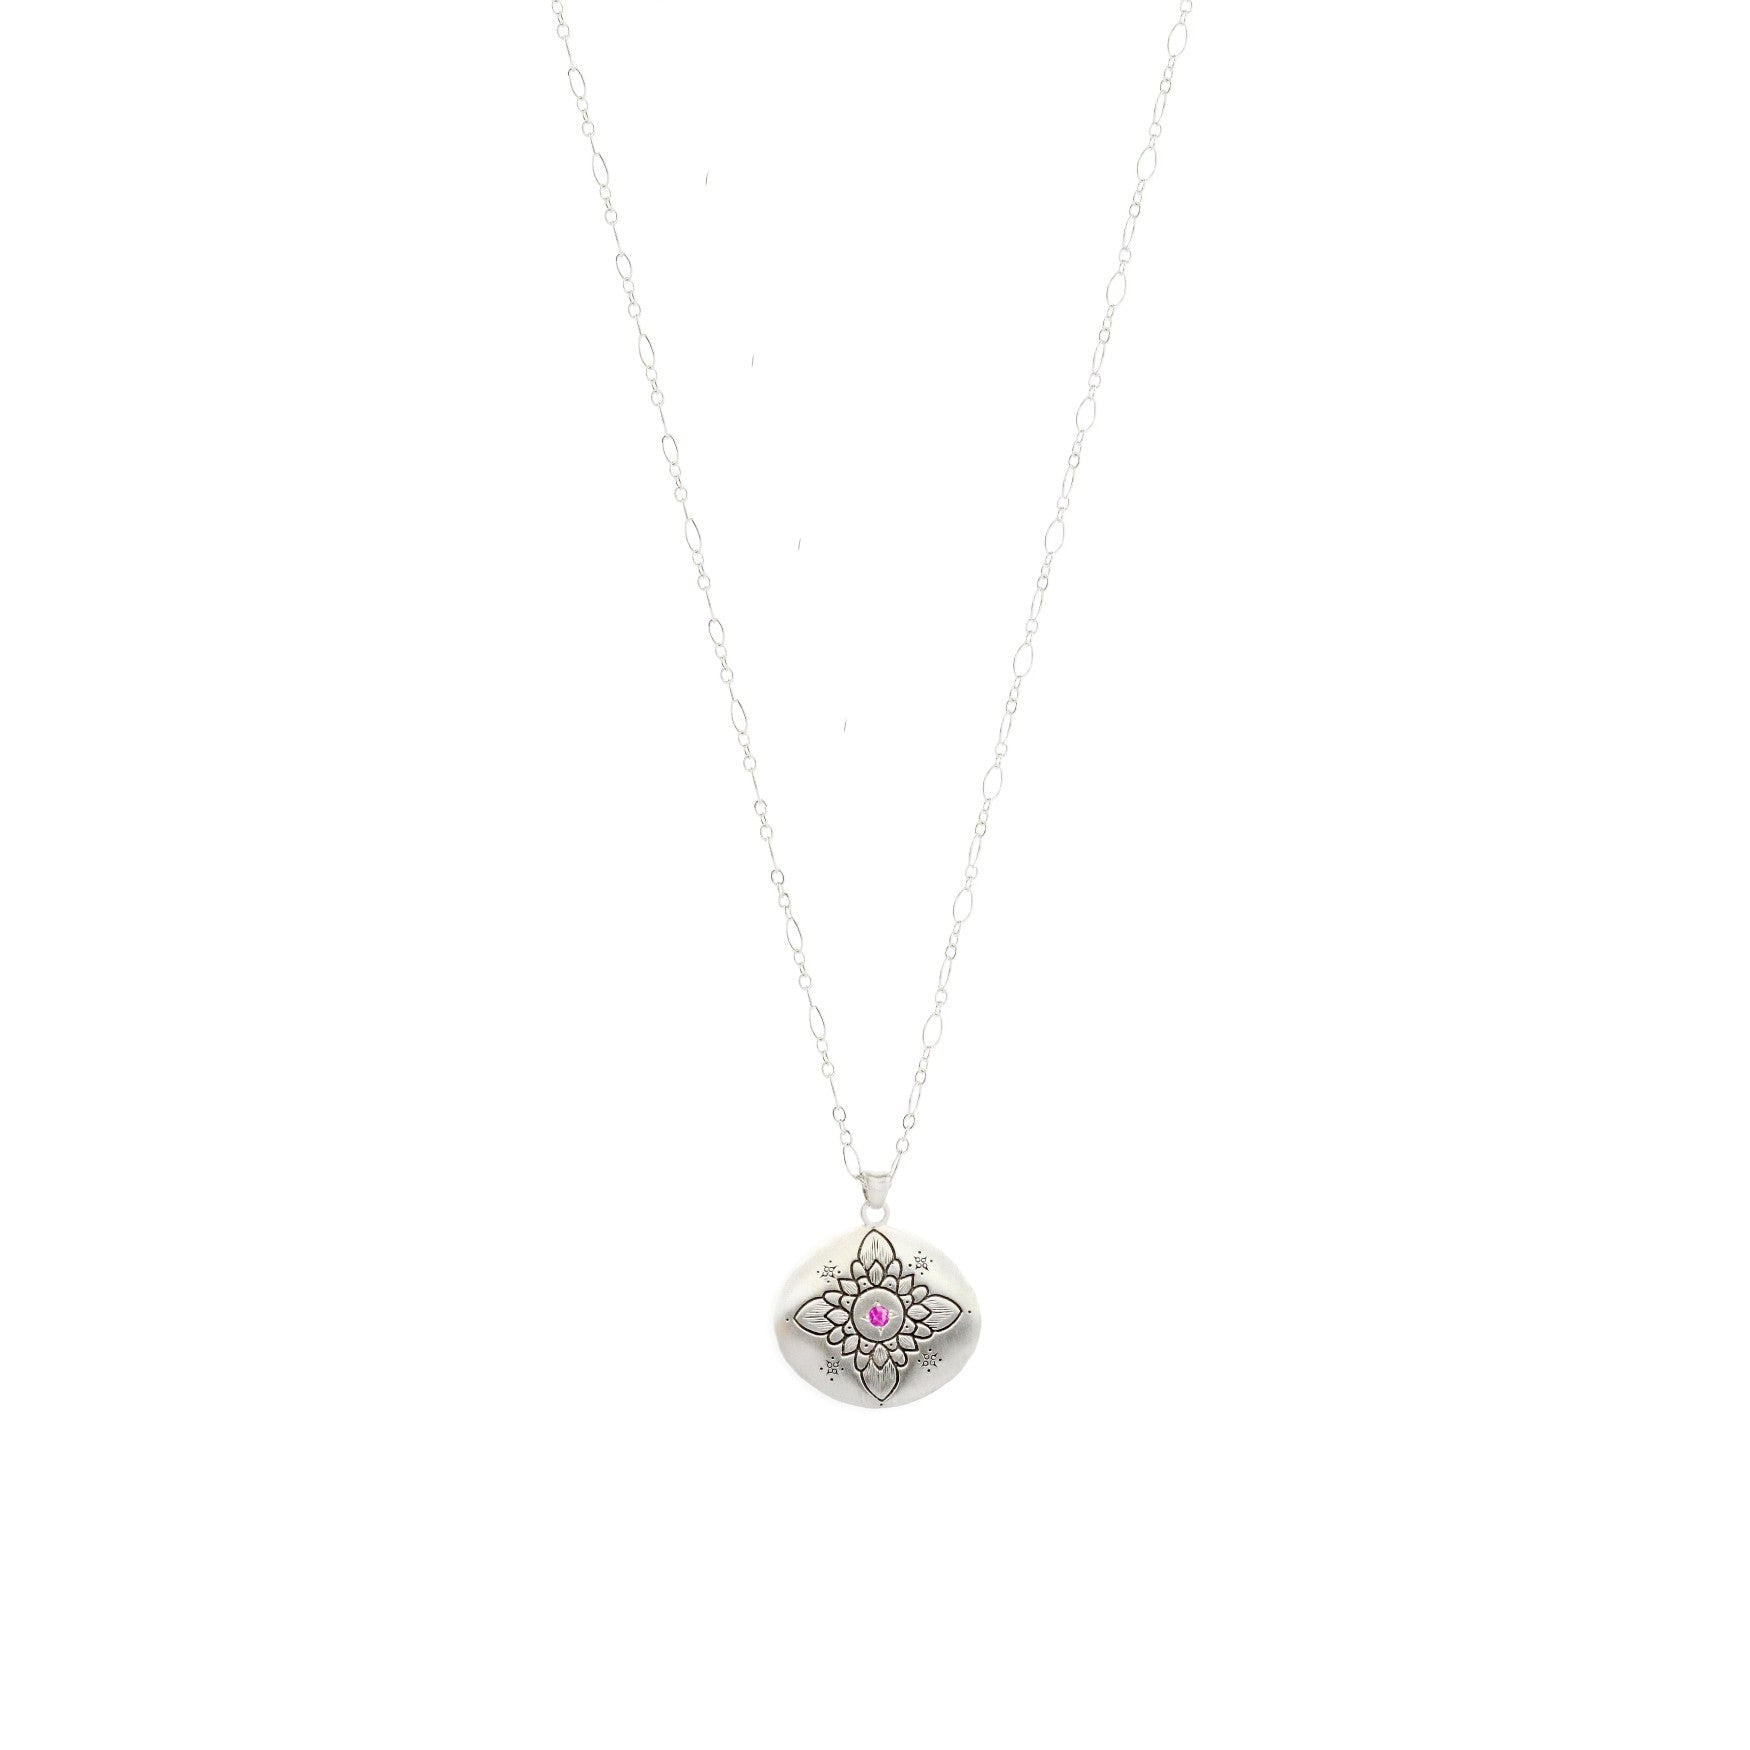 Adel Chefridi Studio | Pink Sapphire "Lotus" Pendant Necklace | Firecracker